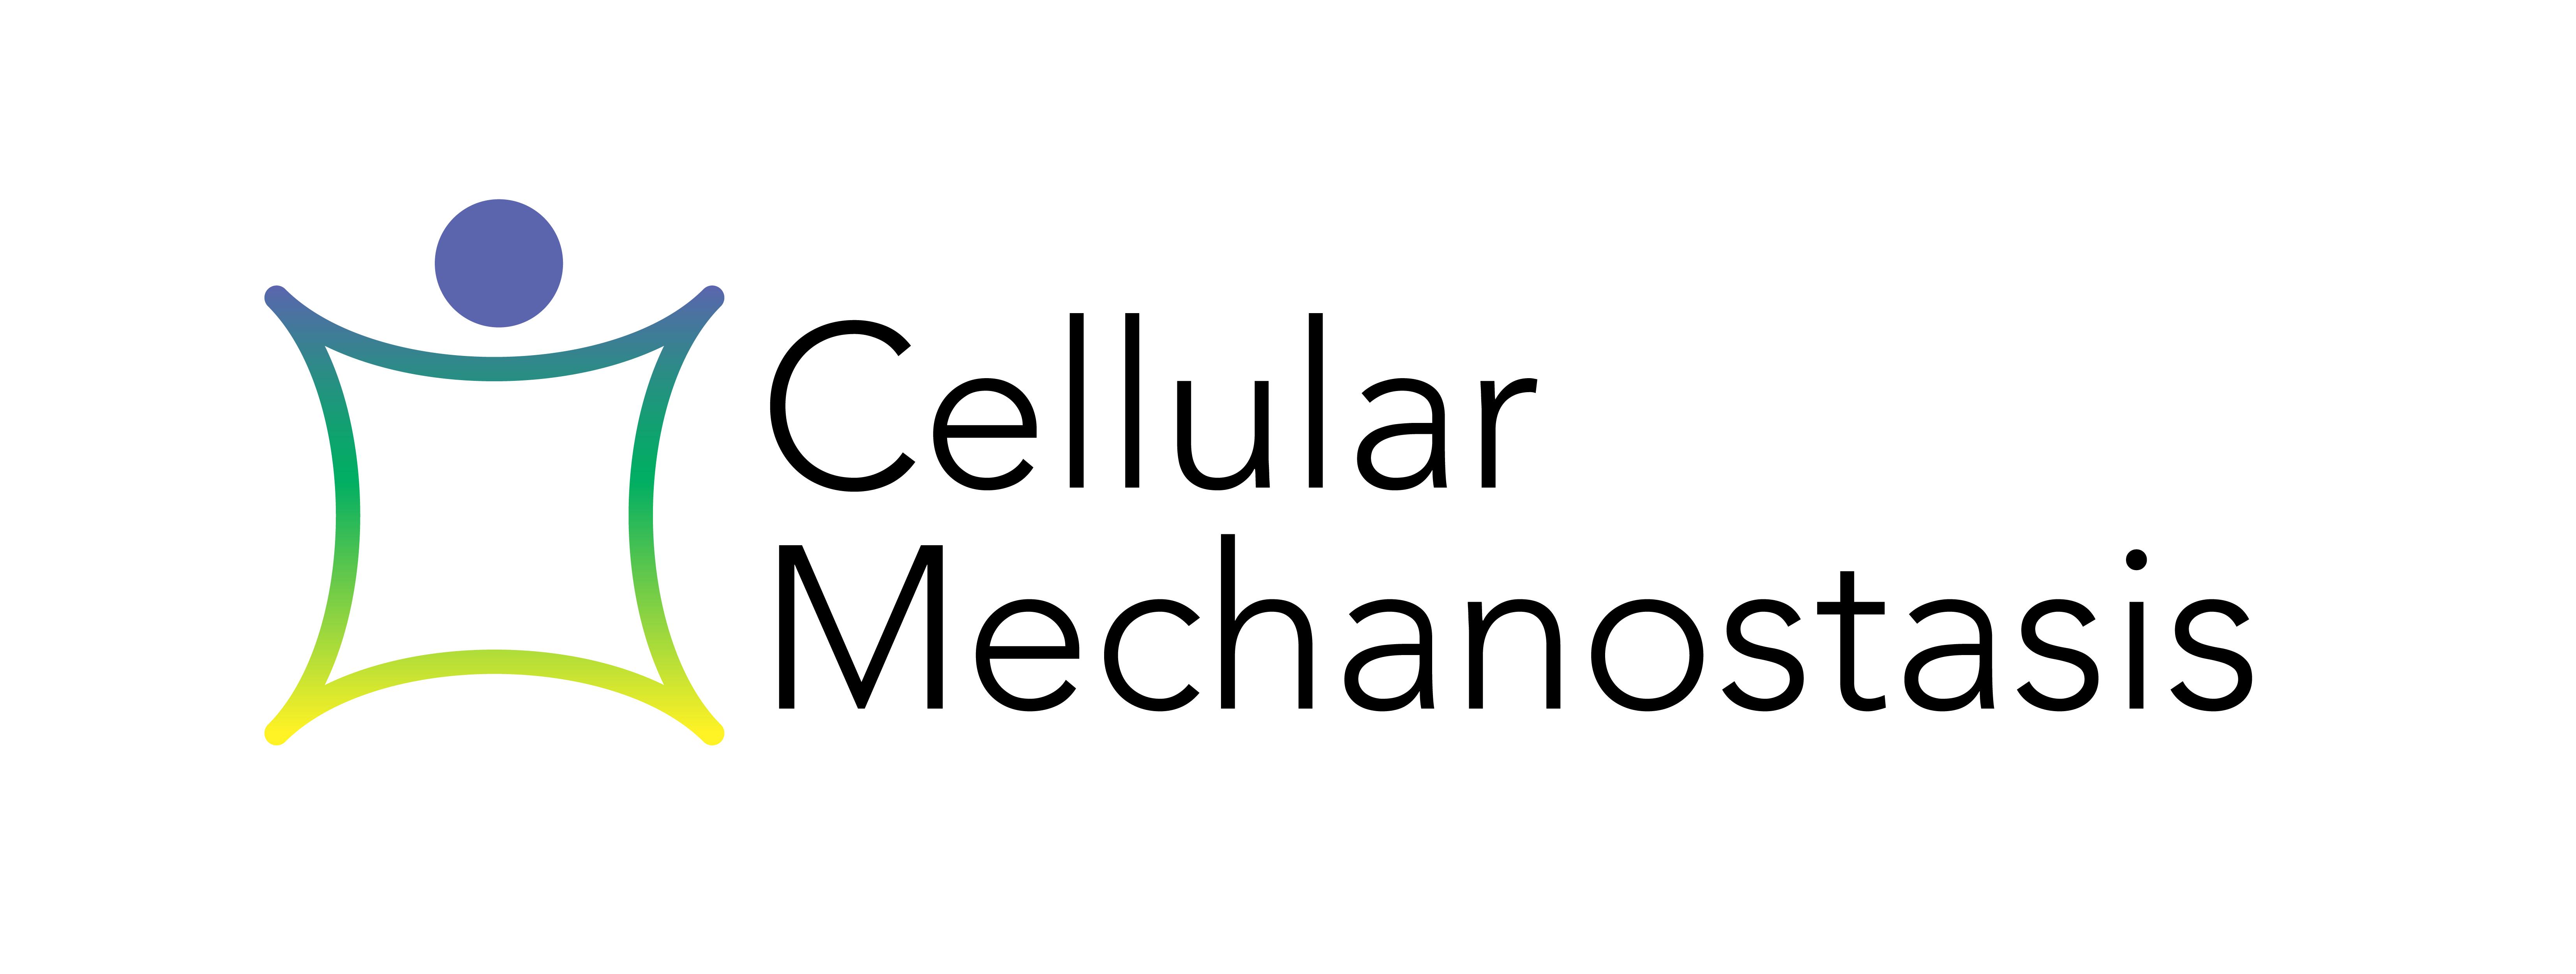 Cellular Mechanostasis